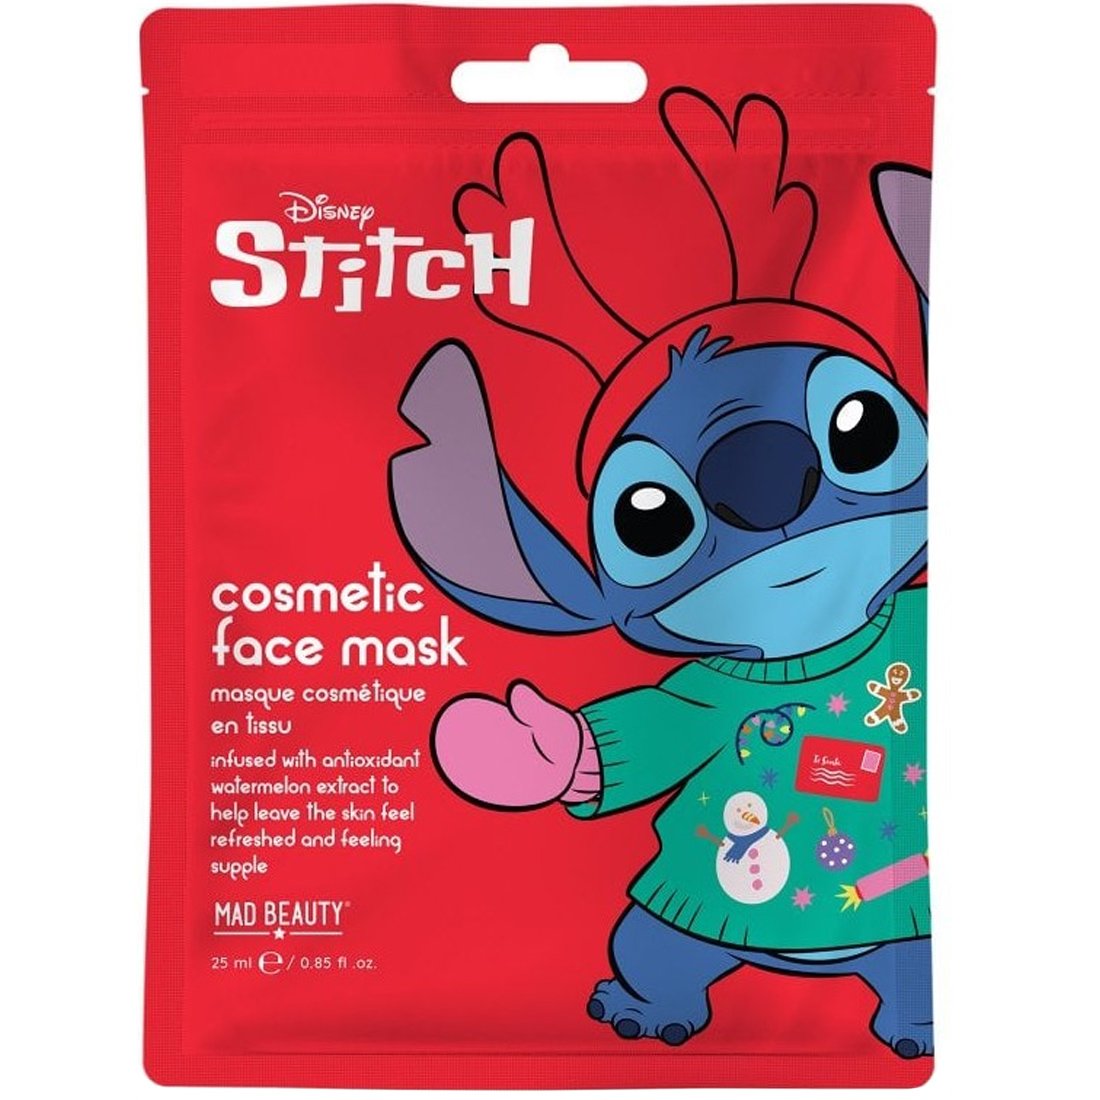 Mad Beauty Disney Stitch Cosmetic Tissue Face Mask Αντιοξειδωτική Υφασμάτινη Μάσκα Προσώπου με Άρωμα Καρπούζι 1x25ml